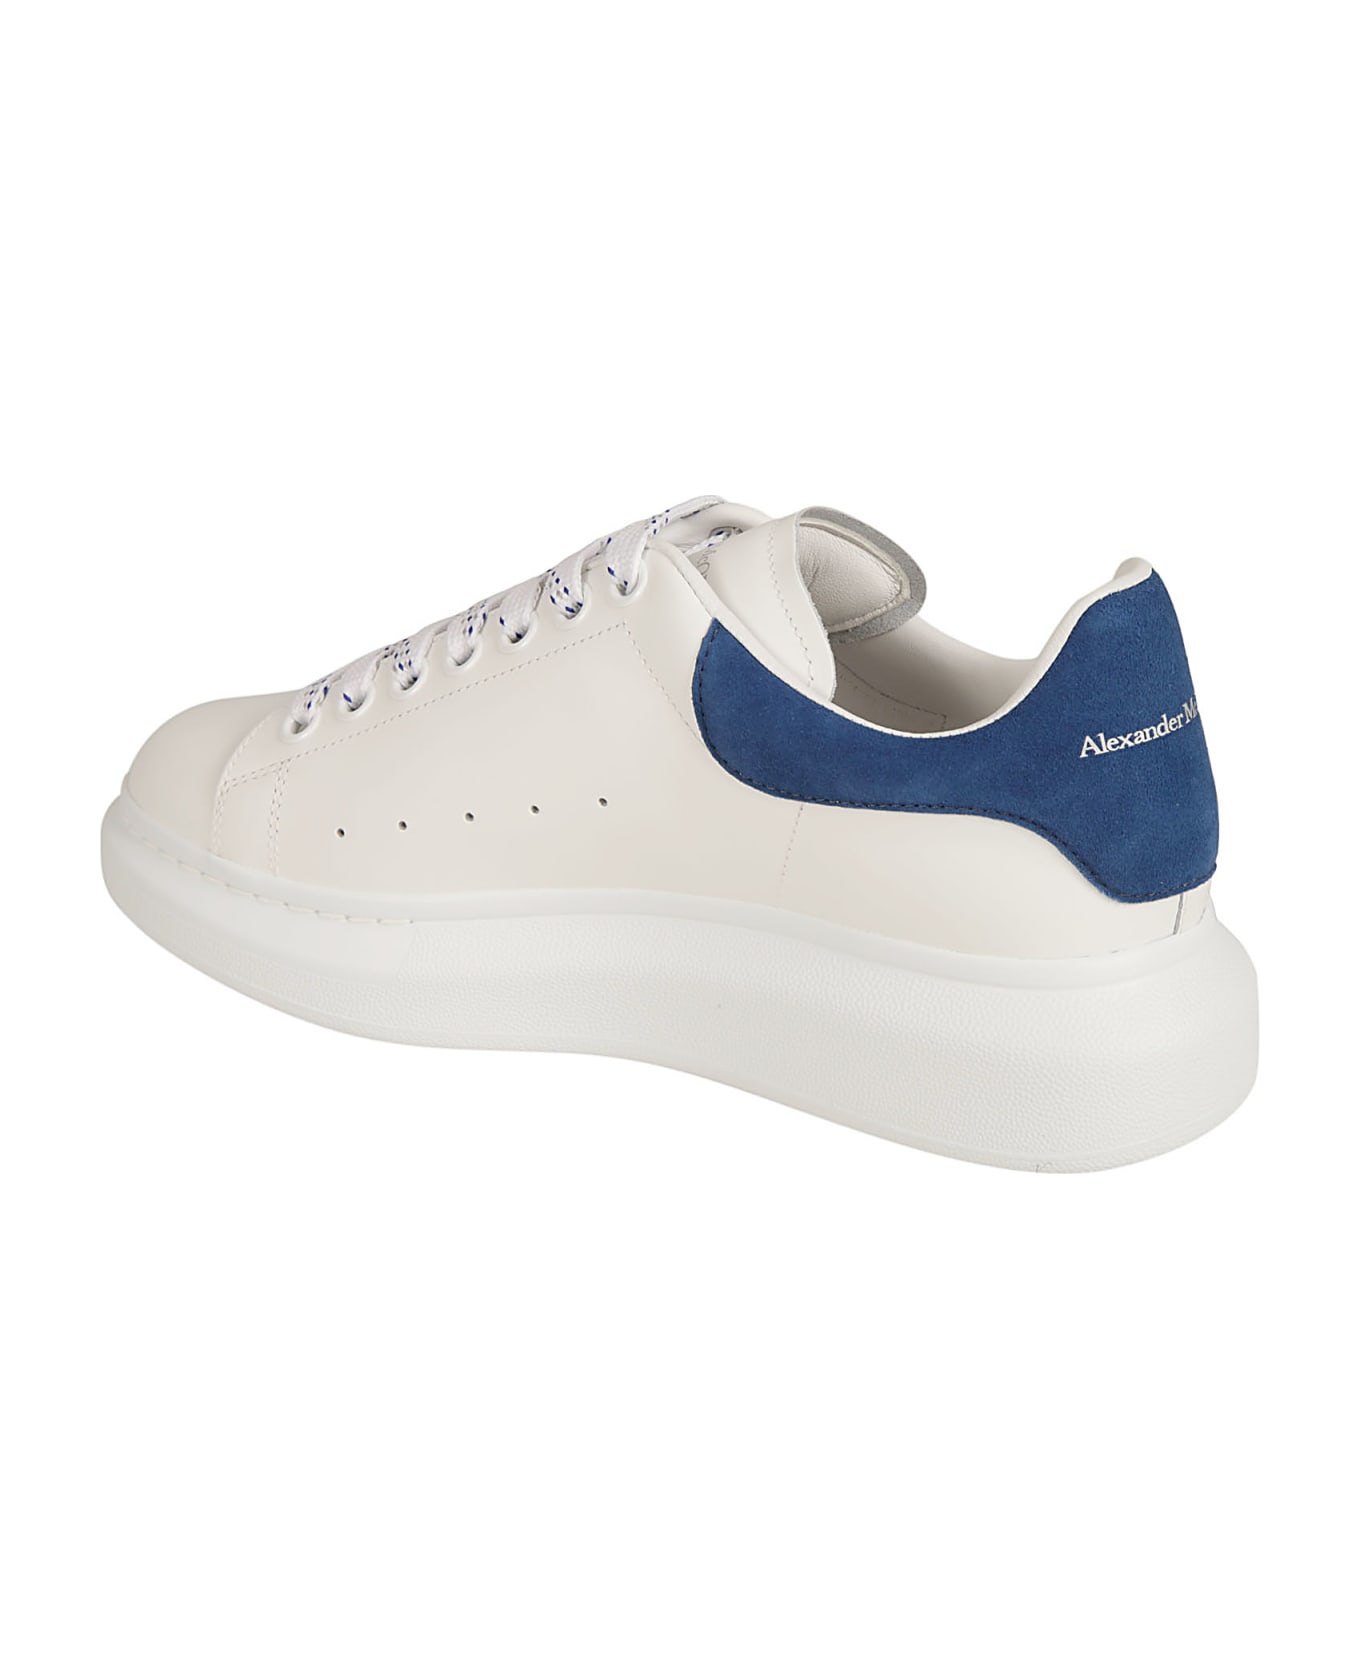 Alexander McQueen Larry Sneakers - White/Paris Blue スニーカー